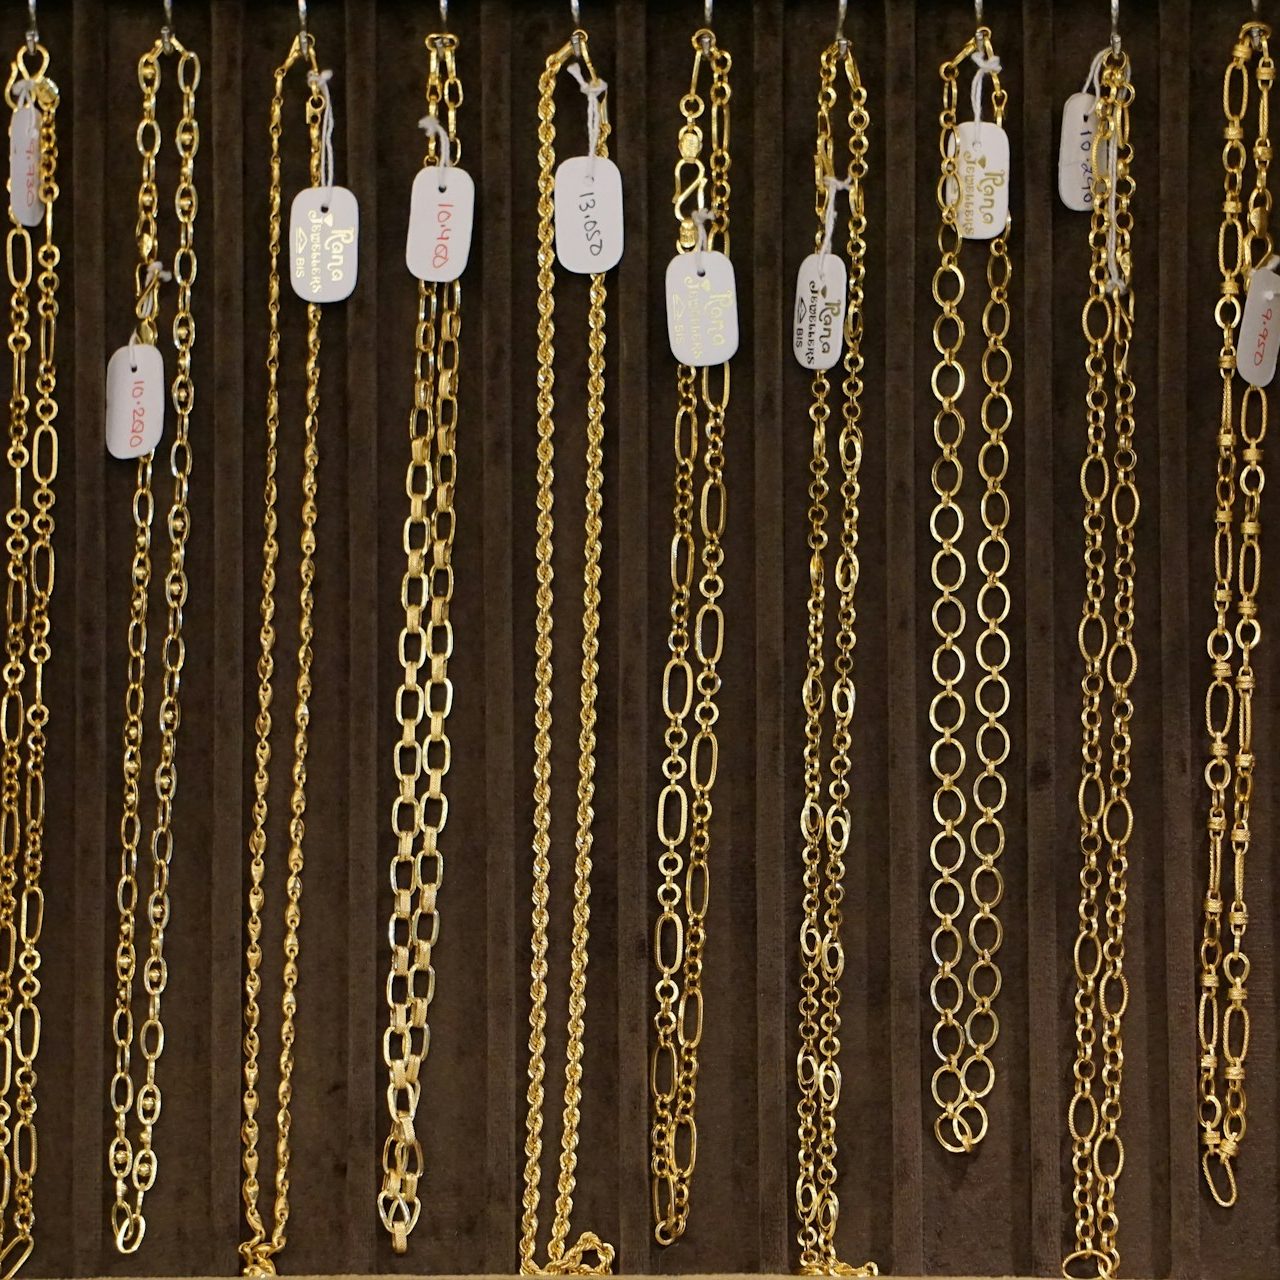 Jewelry showrooms